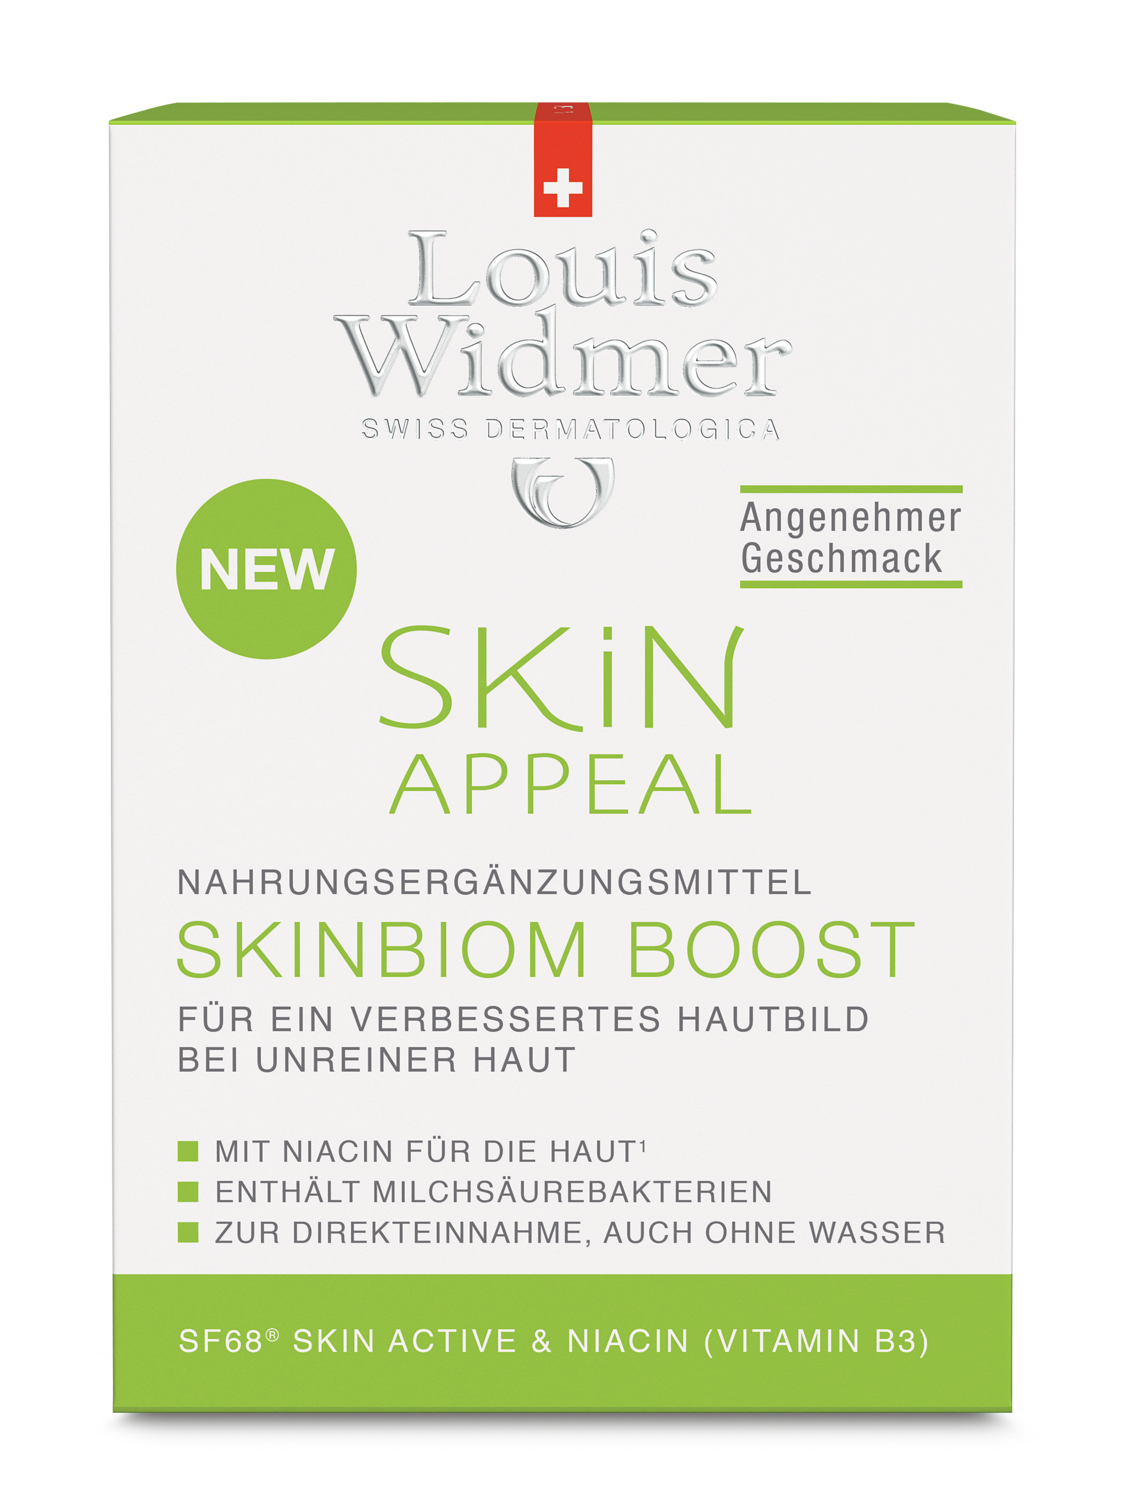 WIDMER Skin Appeal Skinbiom Boost